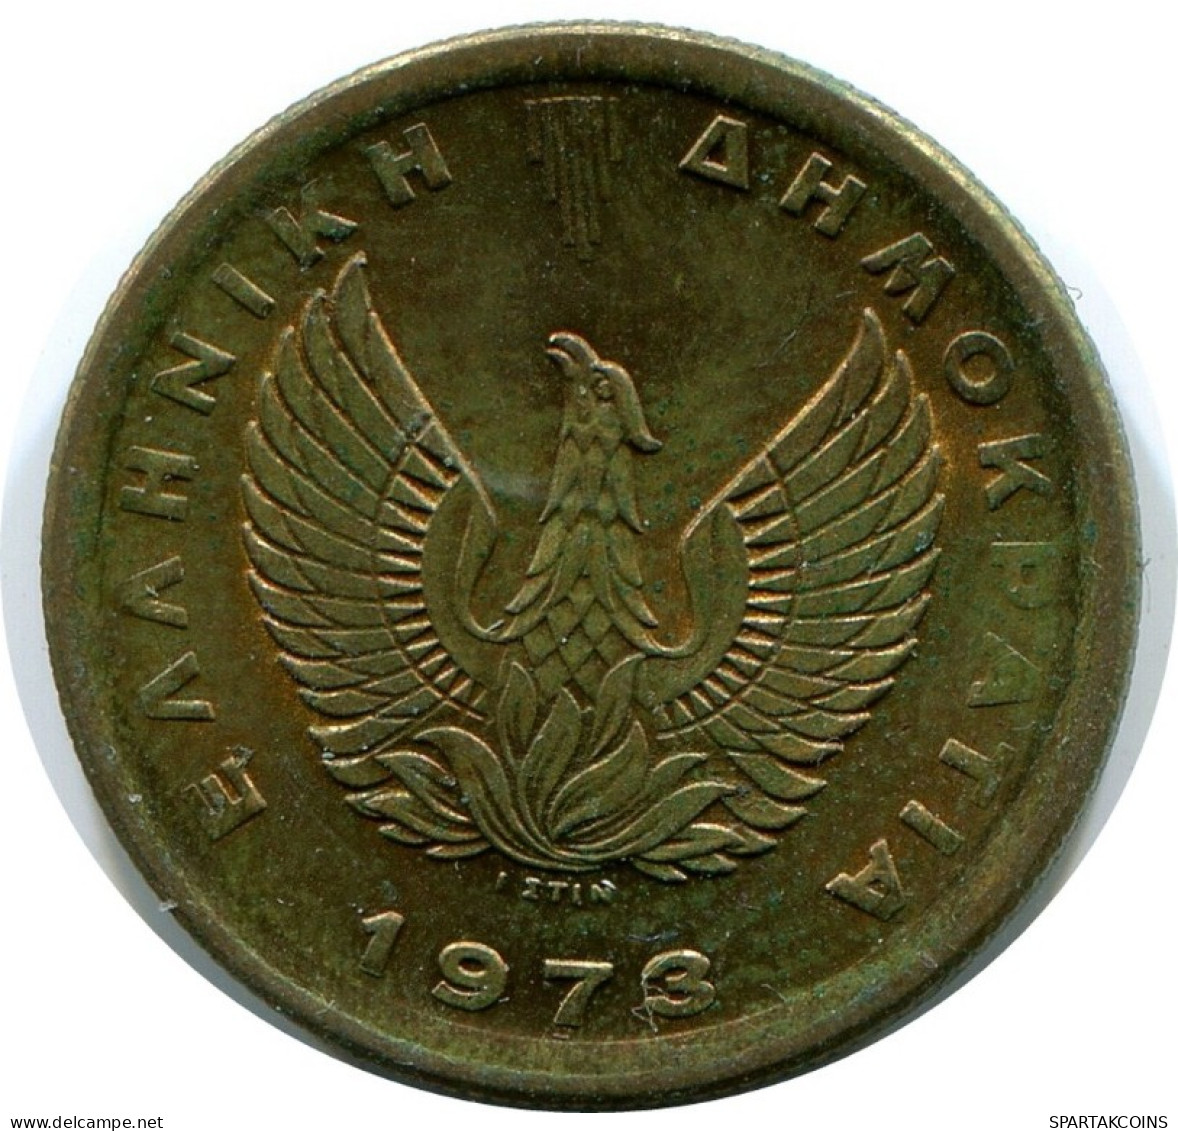 50 LEPTA 1973 GREECE Coin #AH726.U.A - Greece